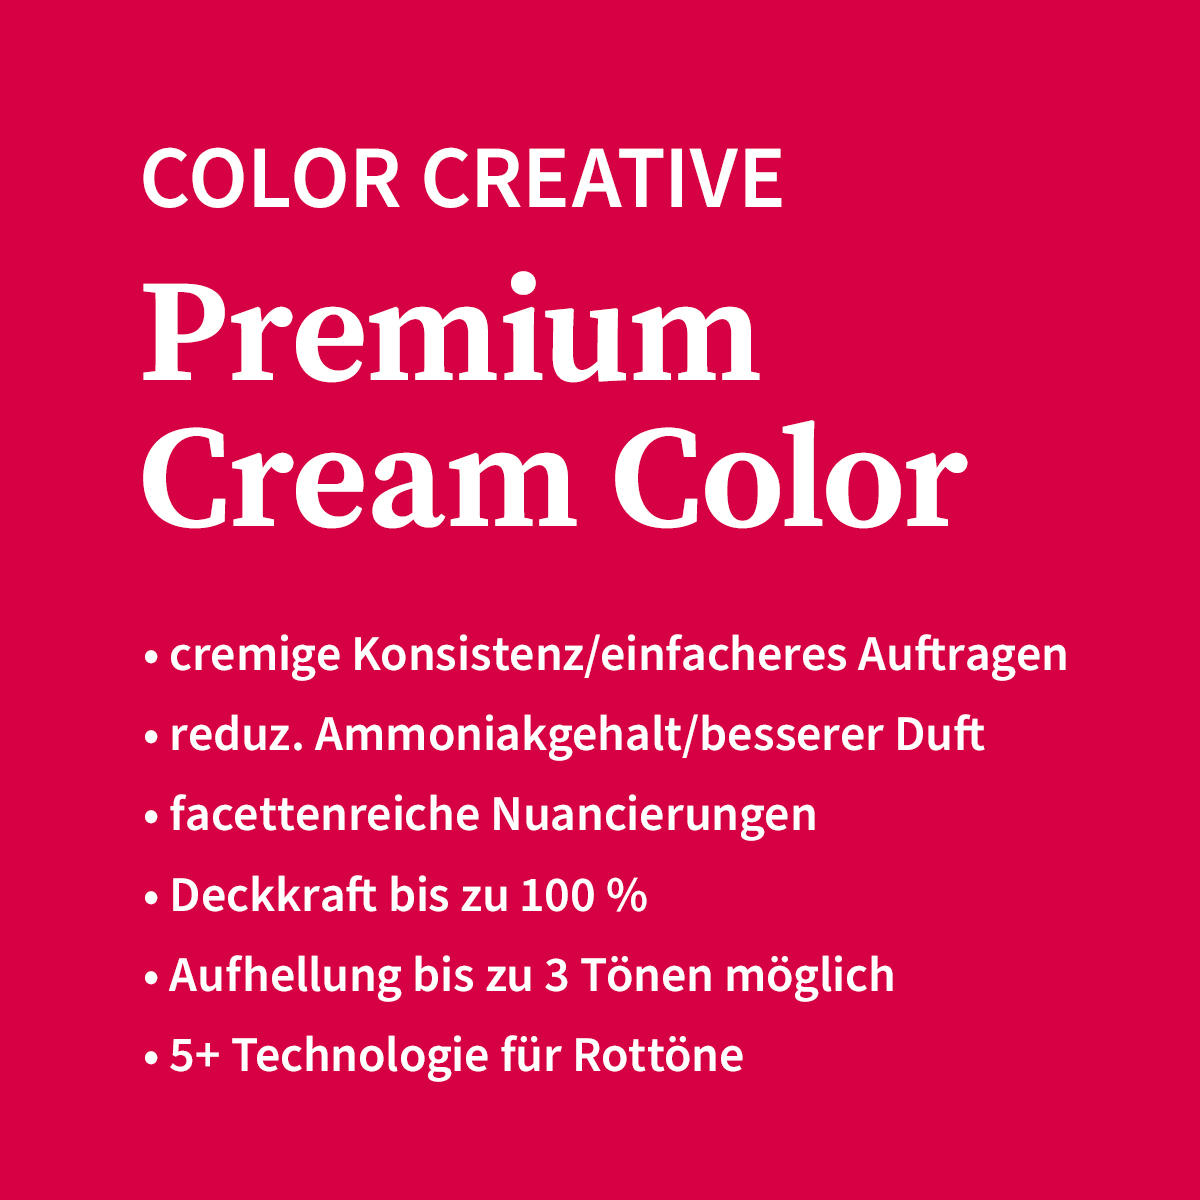 Basler Color Creative Premium Cream Color 7/01 rubio medio ceniza natural, tubo 60 ml - 4